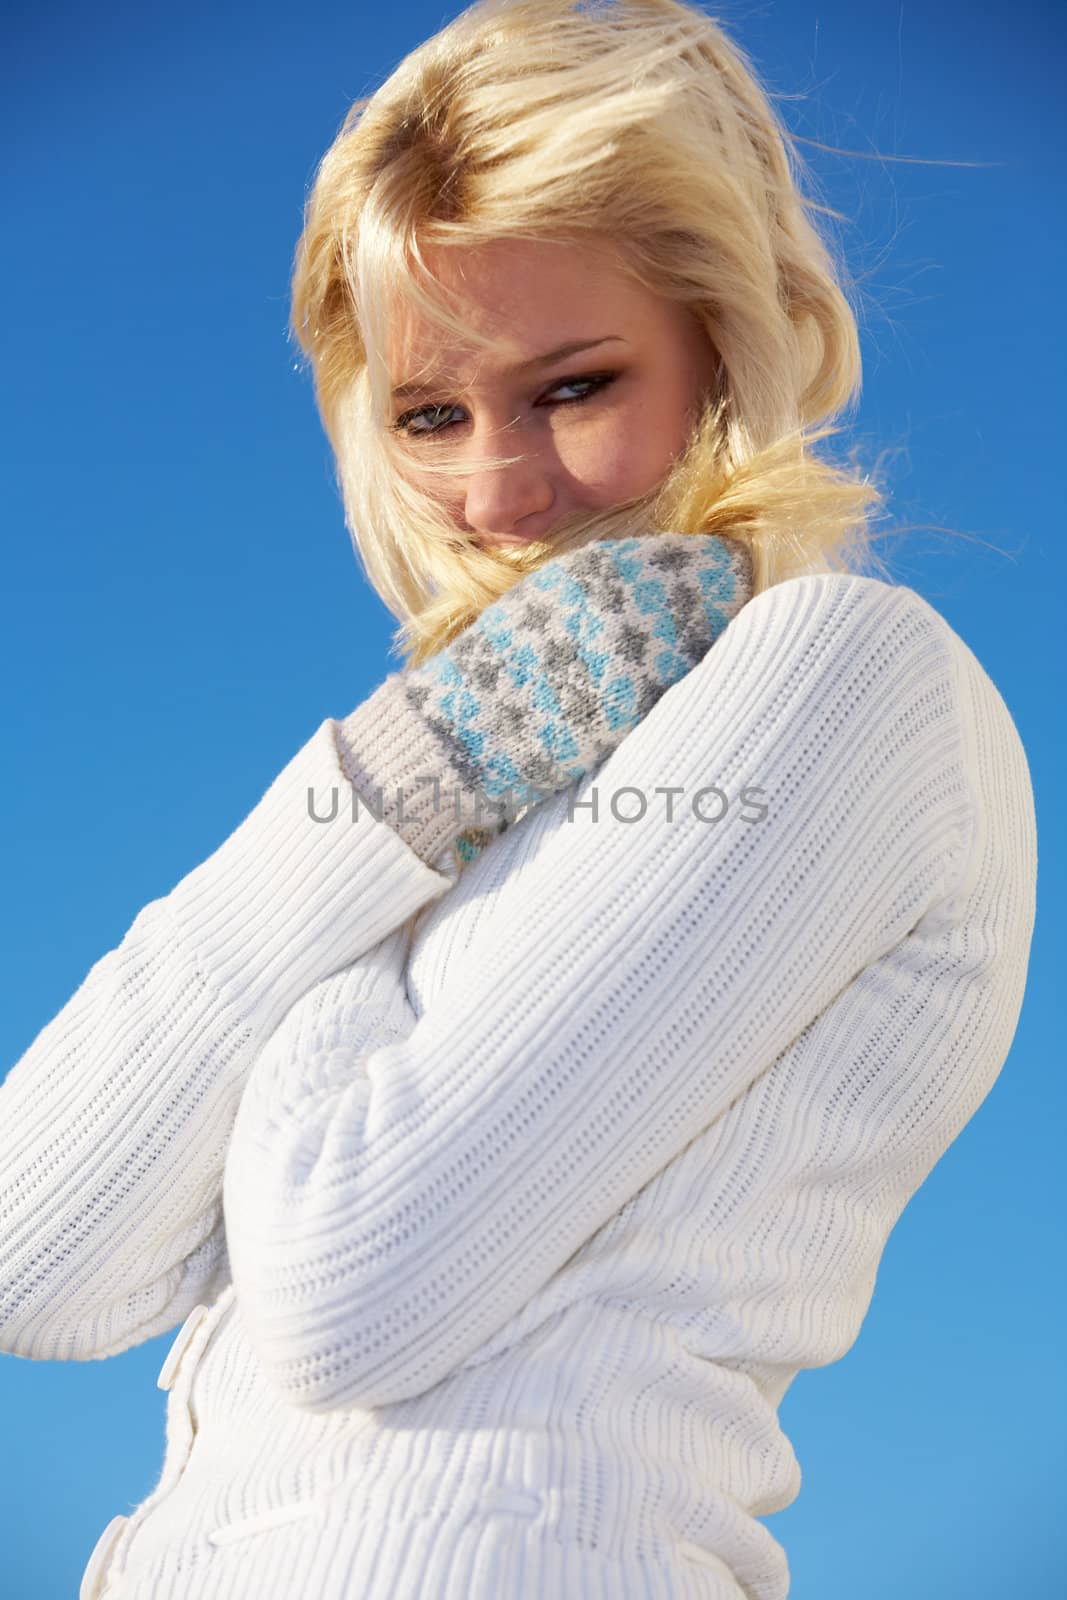 Teenage girl trying to keep herself warm, looking at camera